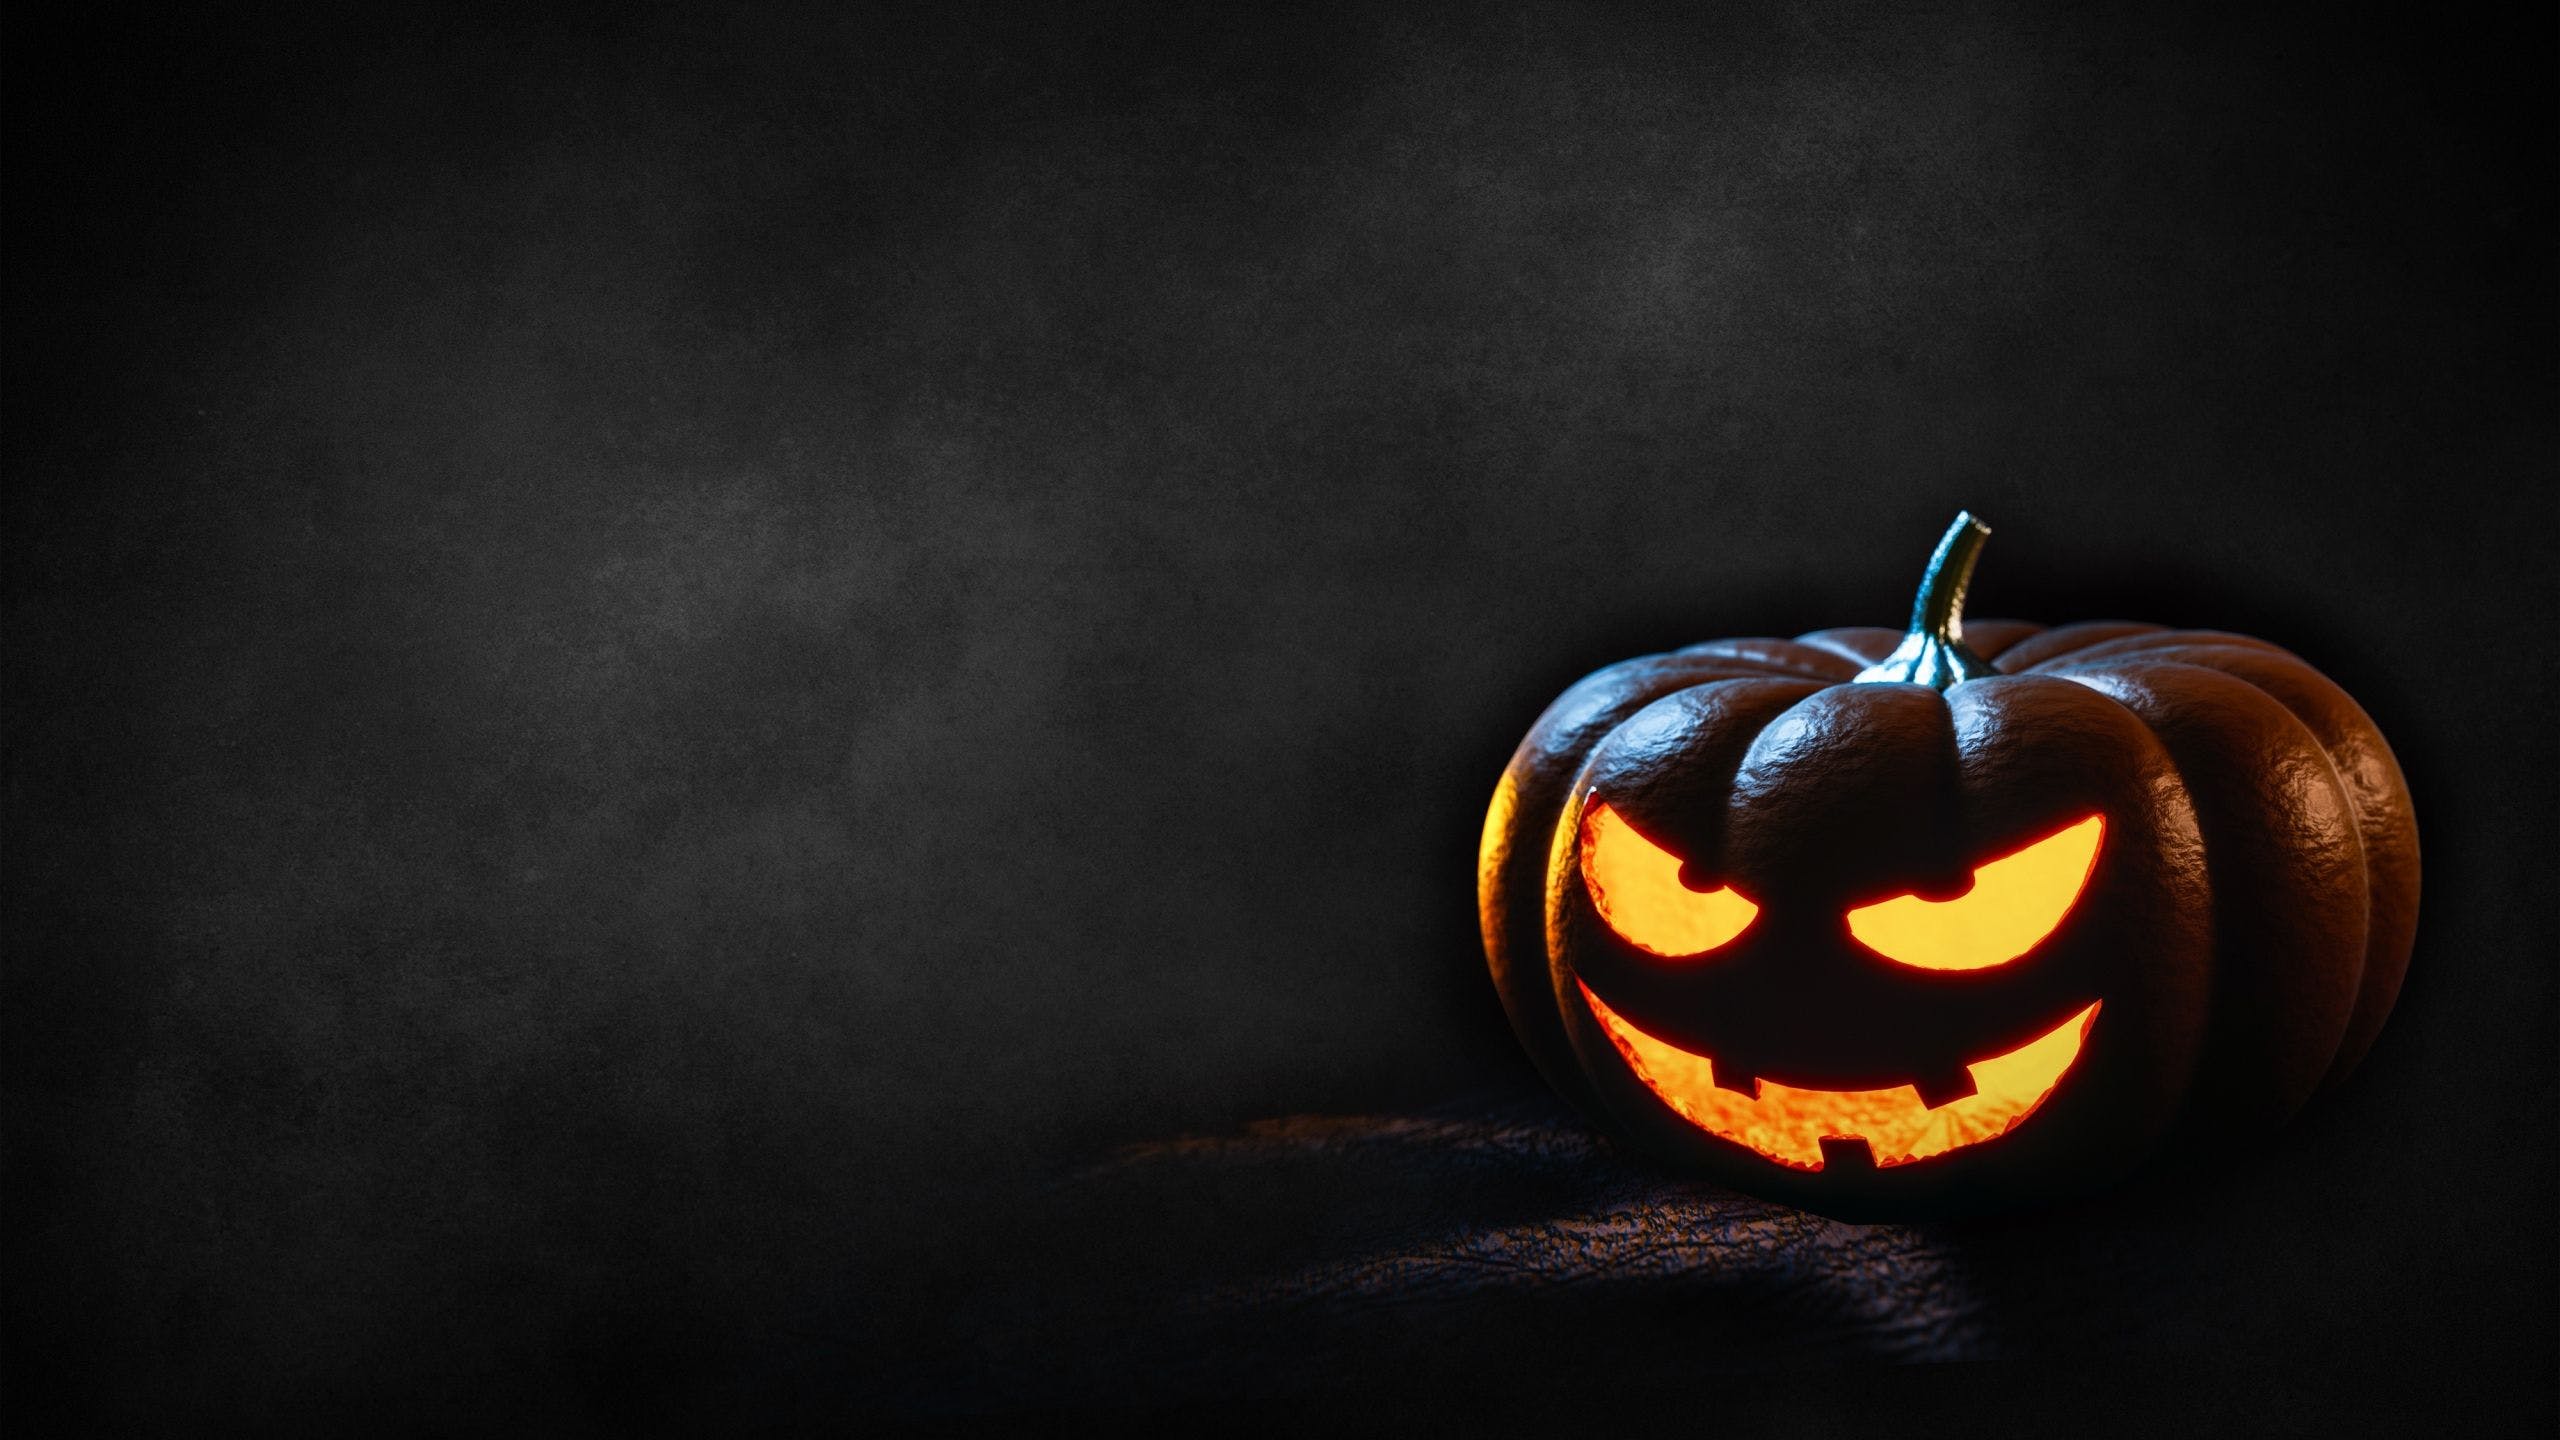 Halloween Pumpkin Jack O Lantern HD Wallpapers  Desktop and Mobile  Images  Photos